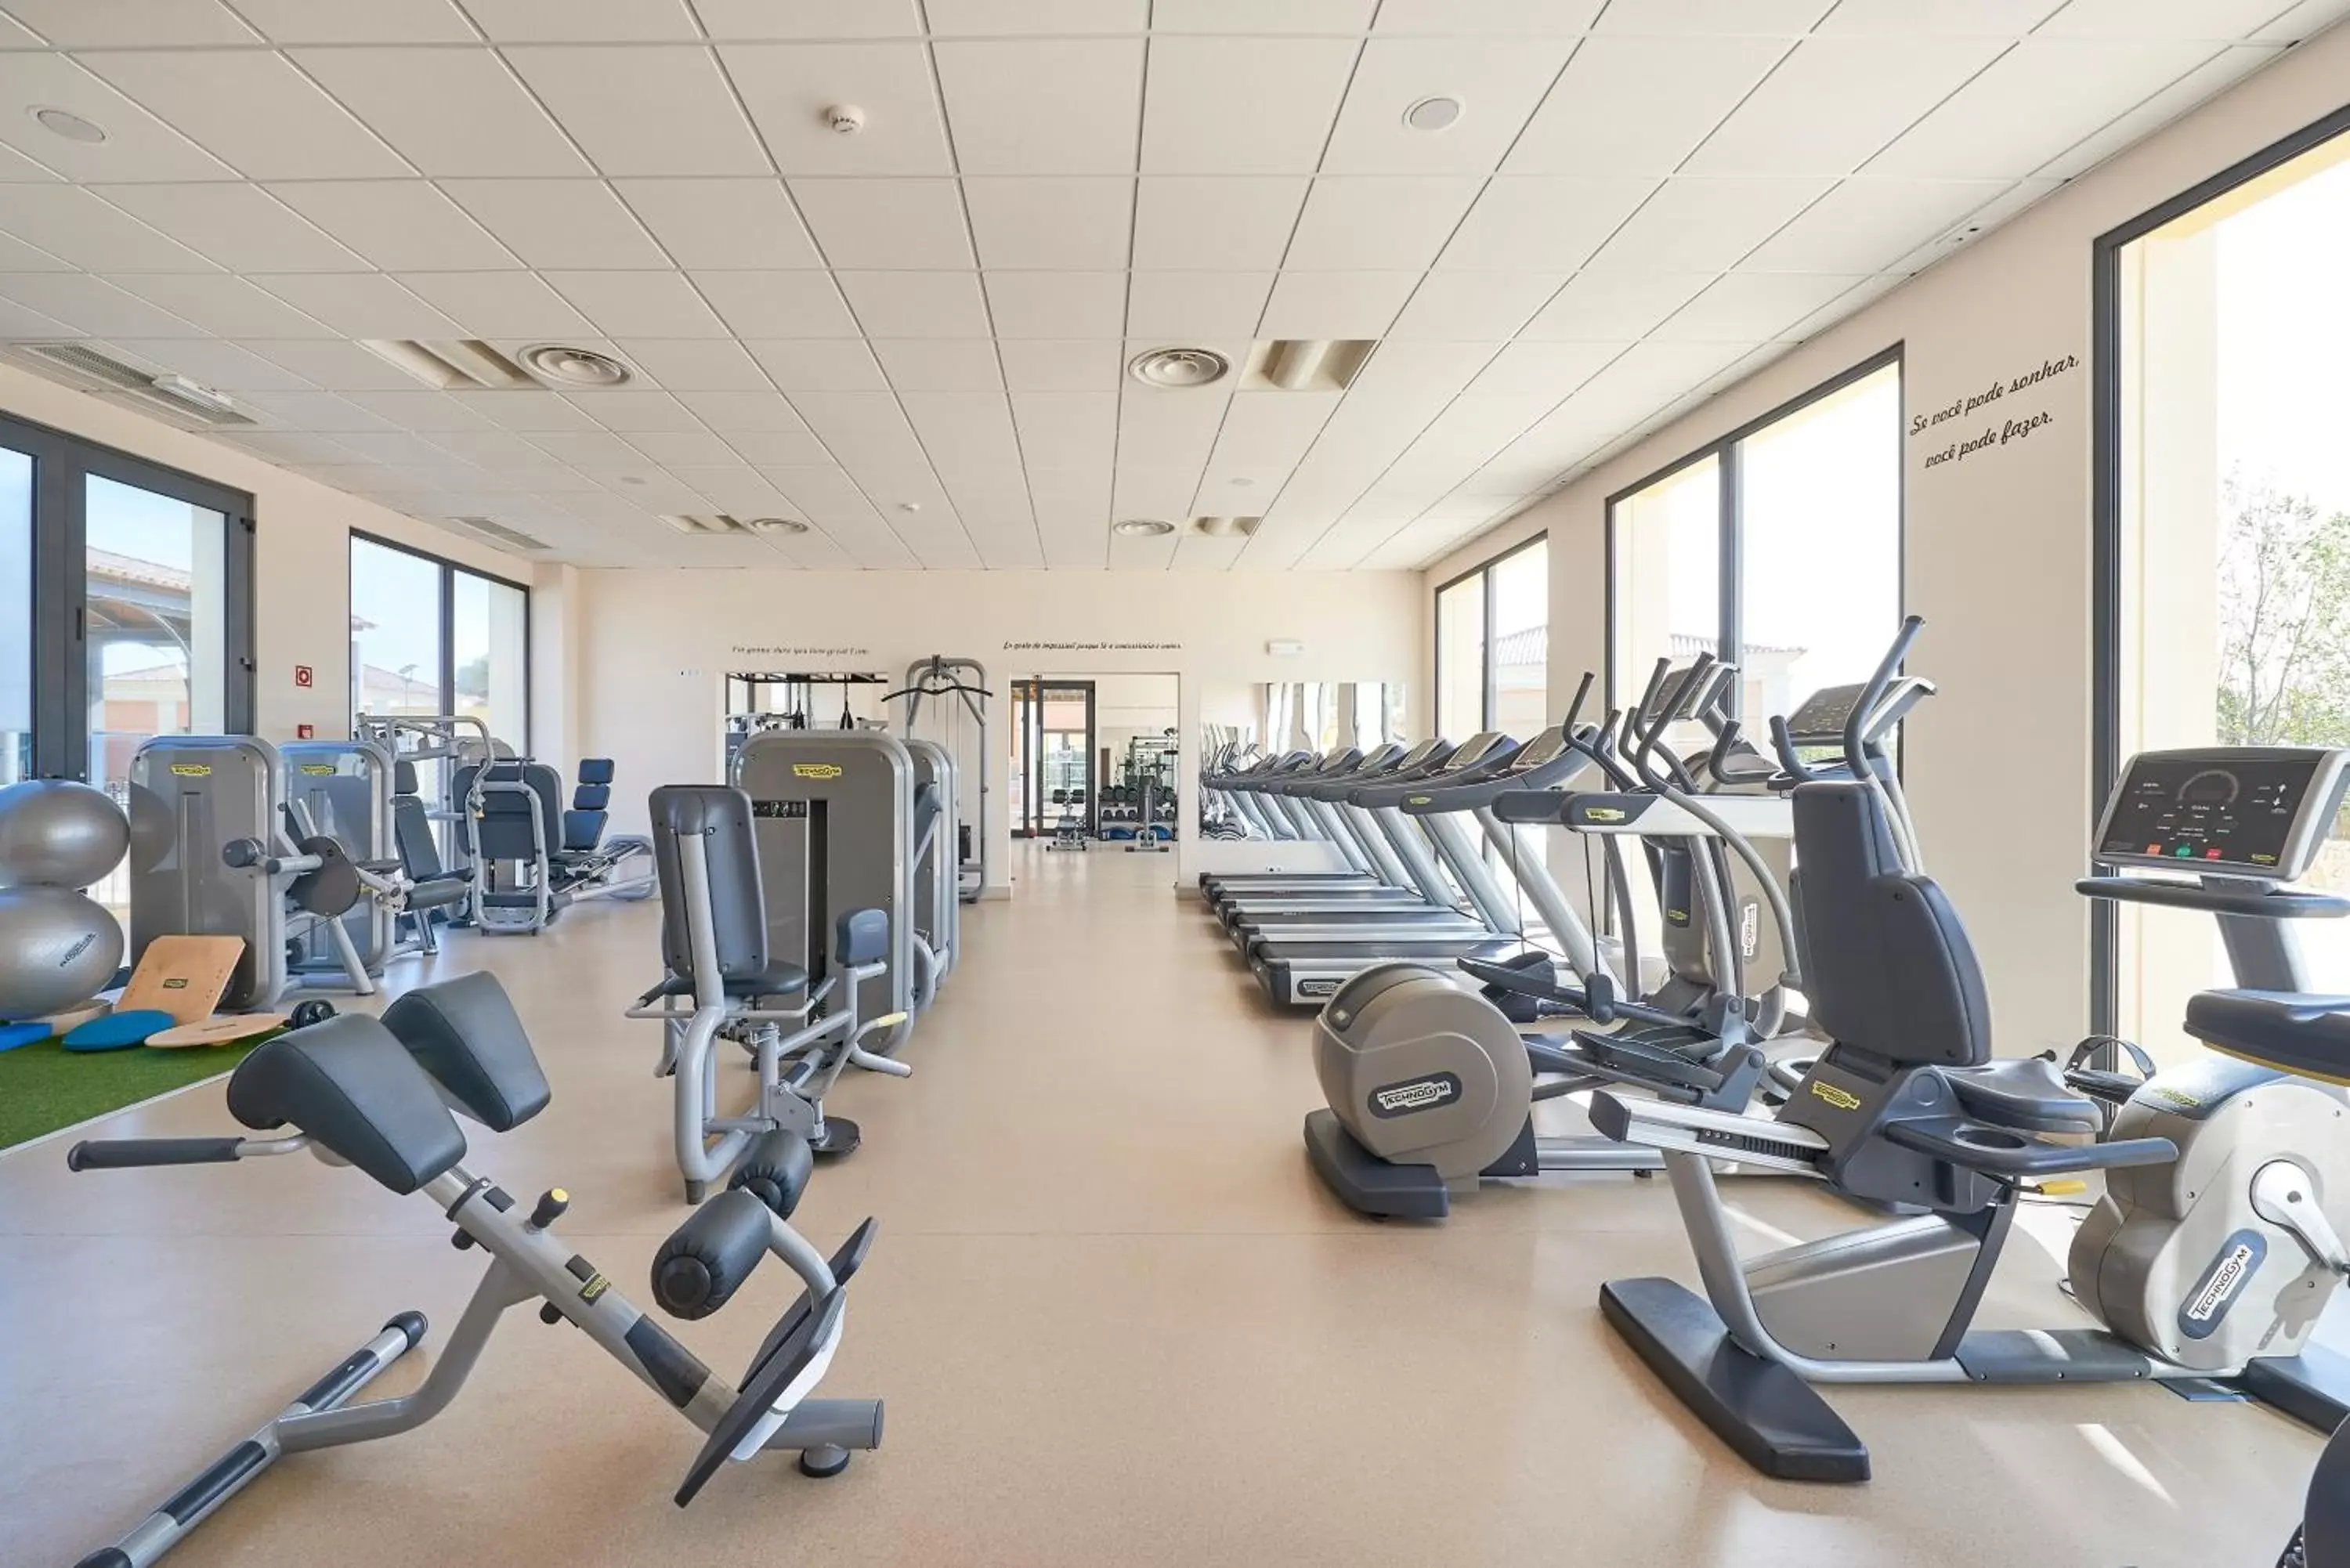 Fitness centre/facilities, Fitness Center/Facilities in Cascade Wellness Resort